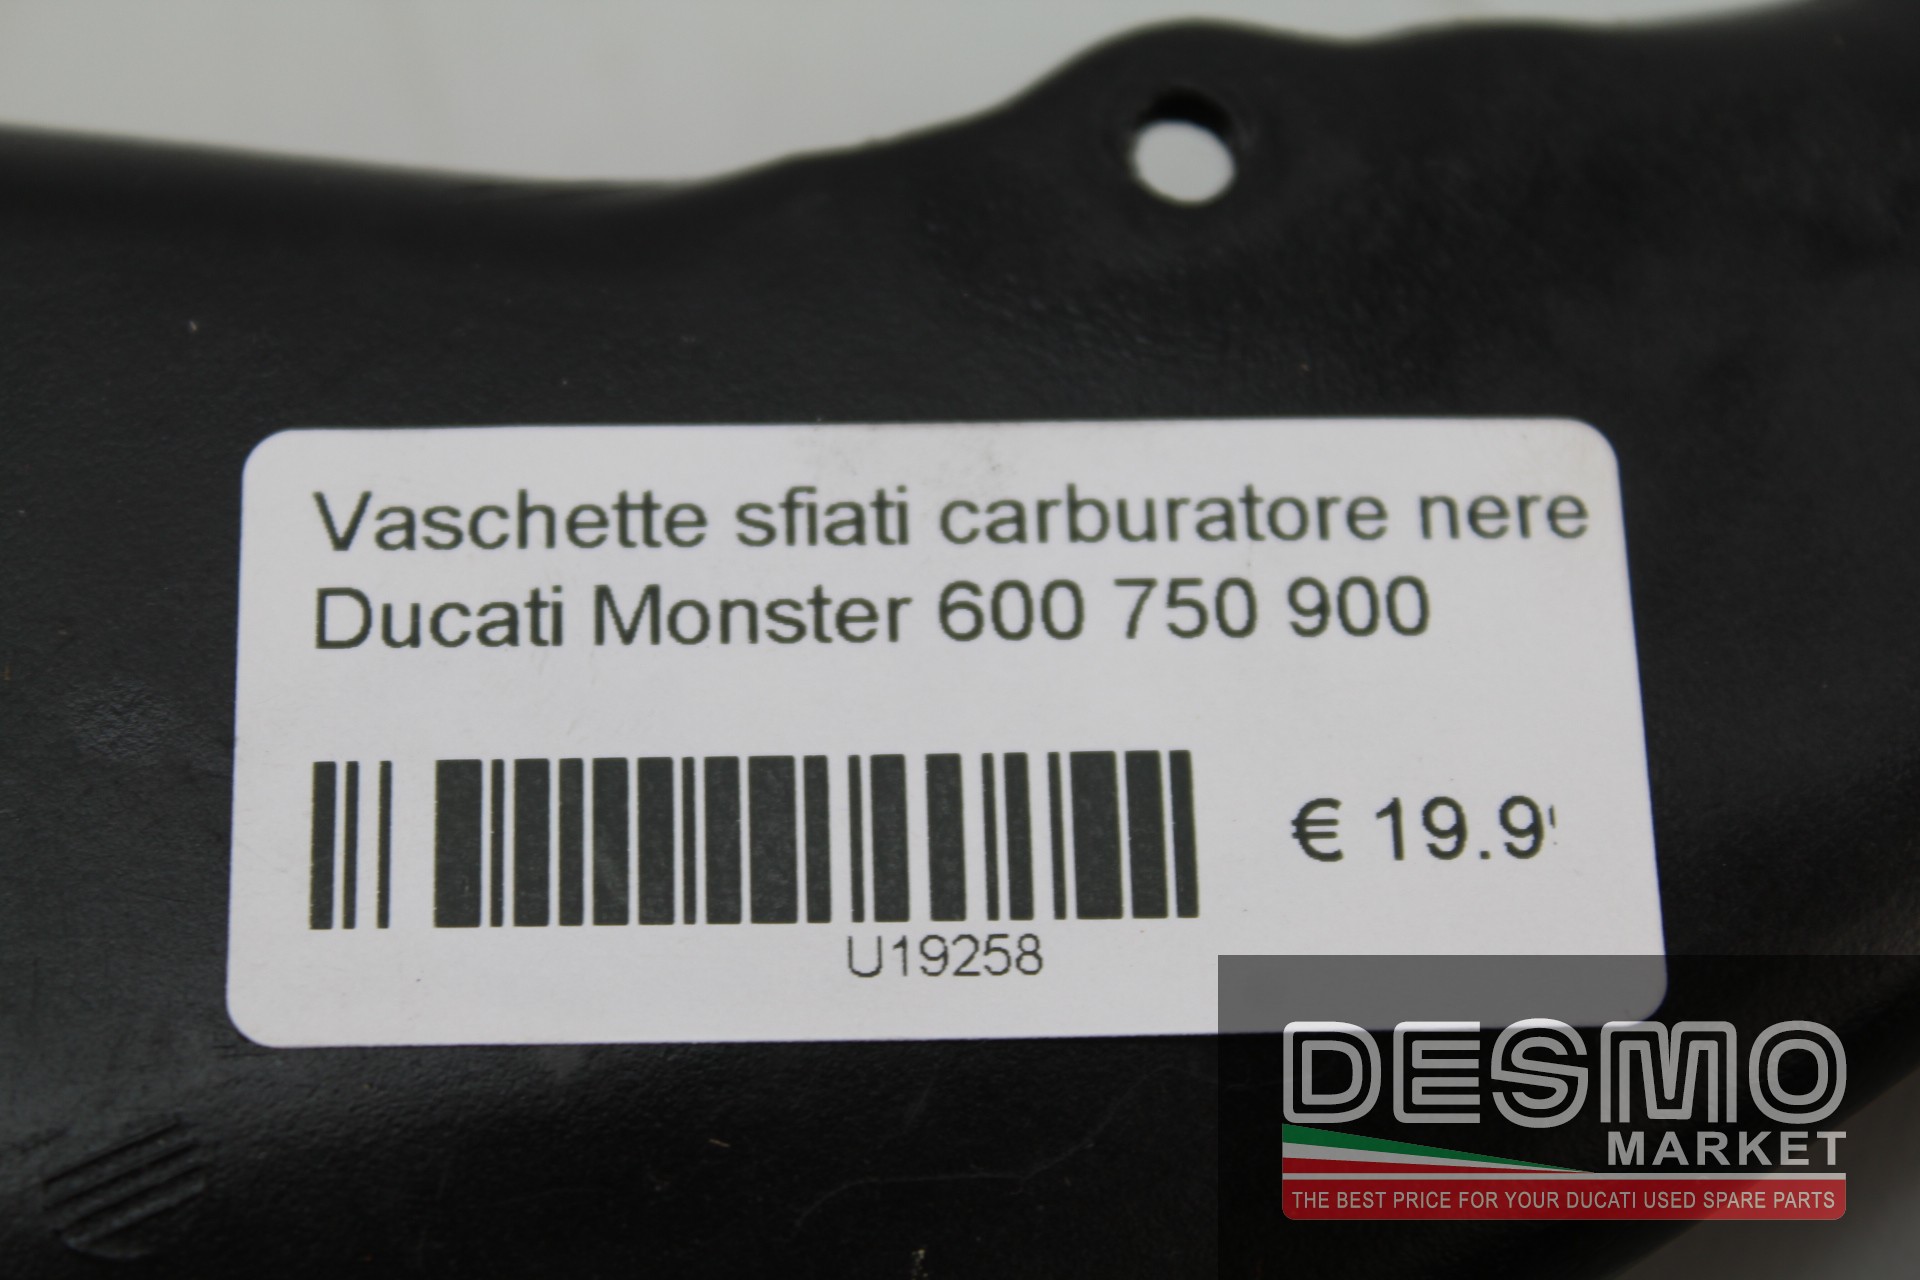 Vaschette sfiati carburatore nere Ducati Monster 600 750 900